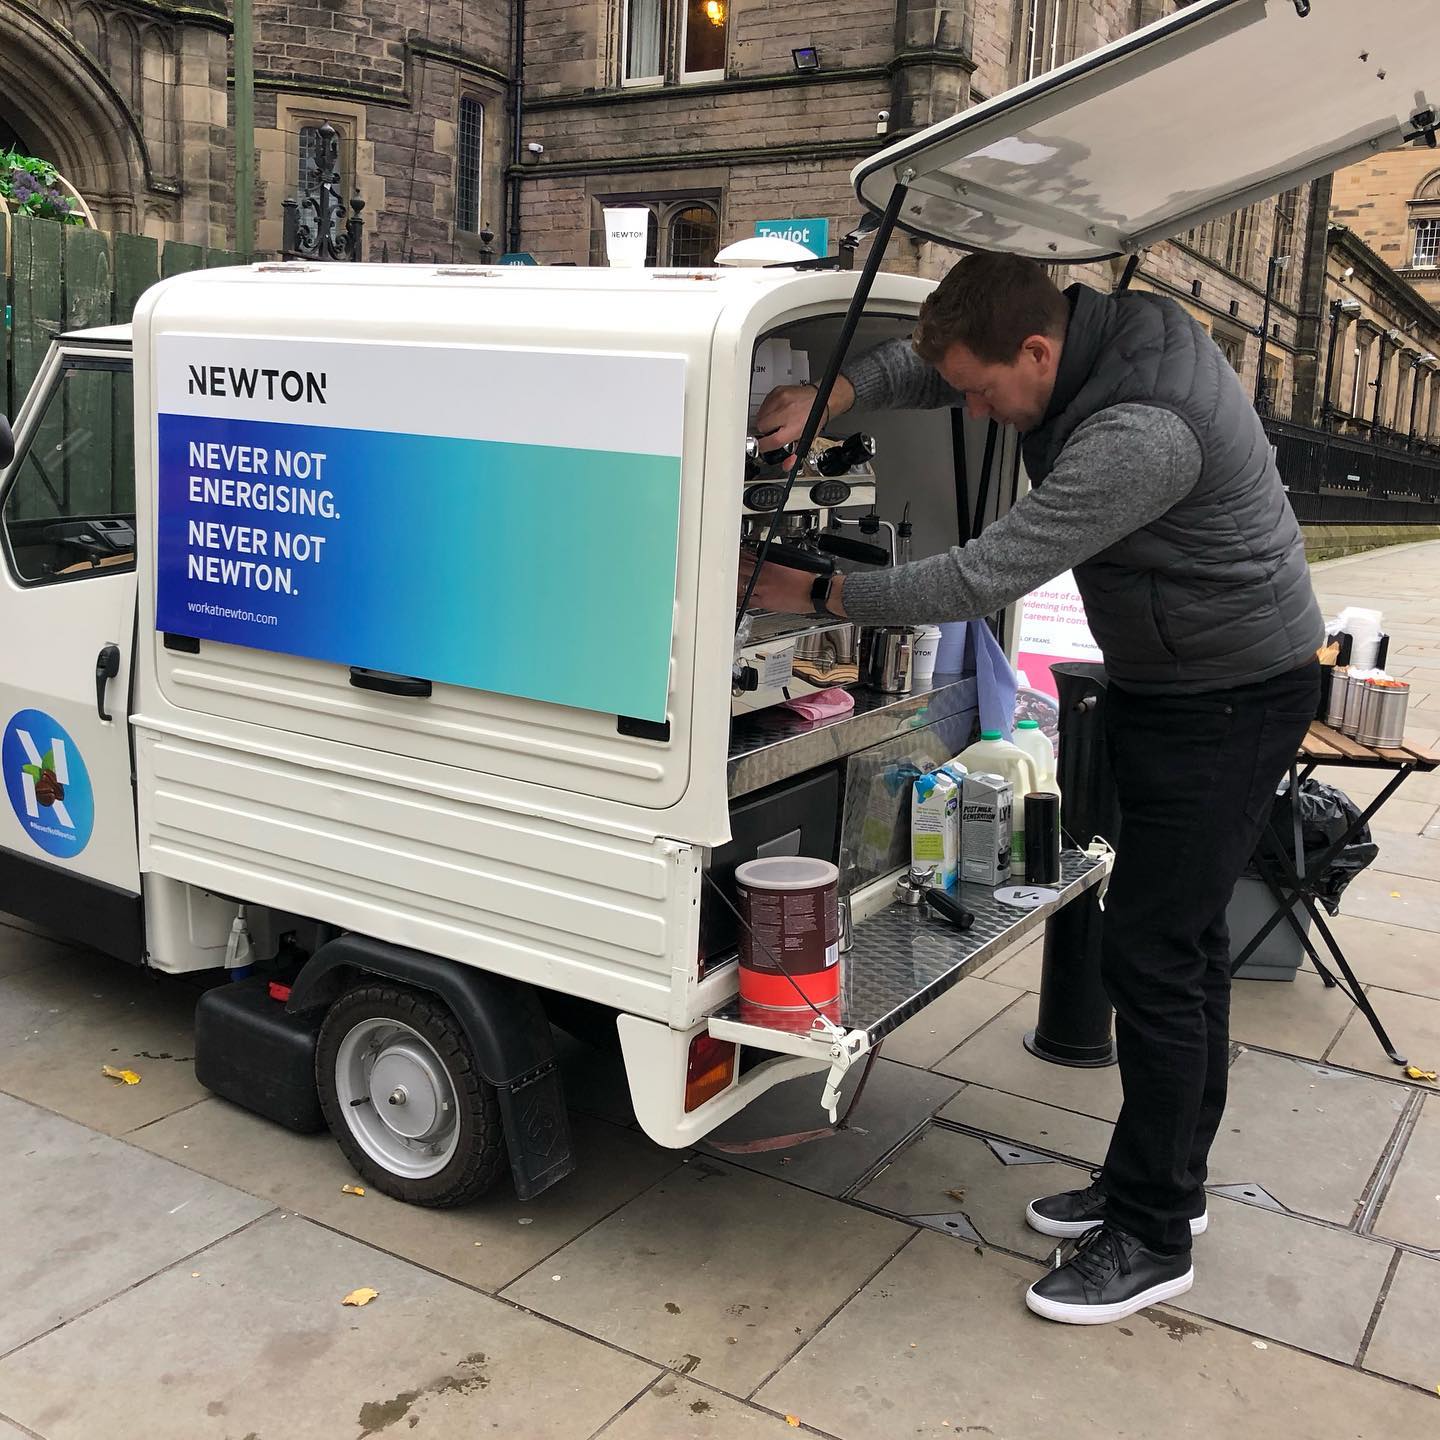 The Mobile Coffee Bean Newton Europe branded mobile coffee van at Edinburgh University